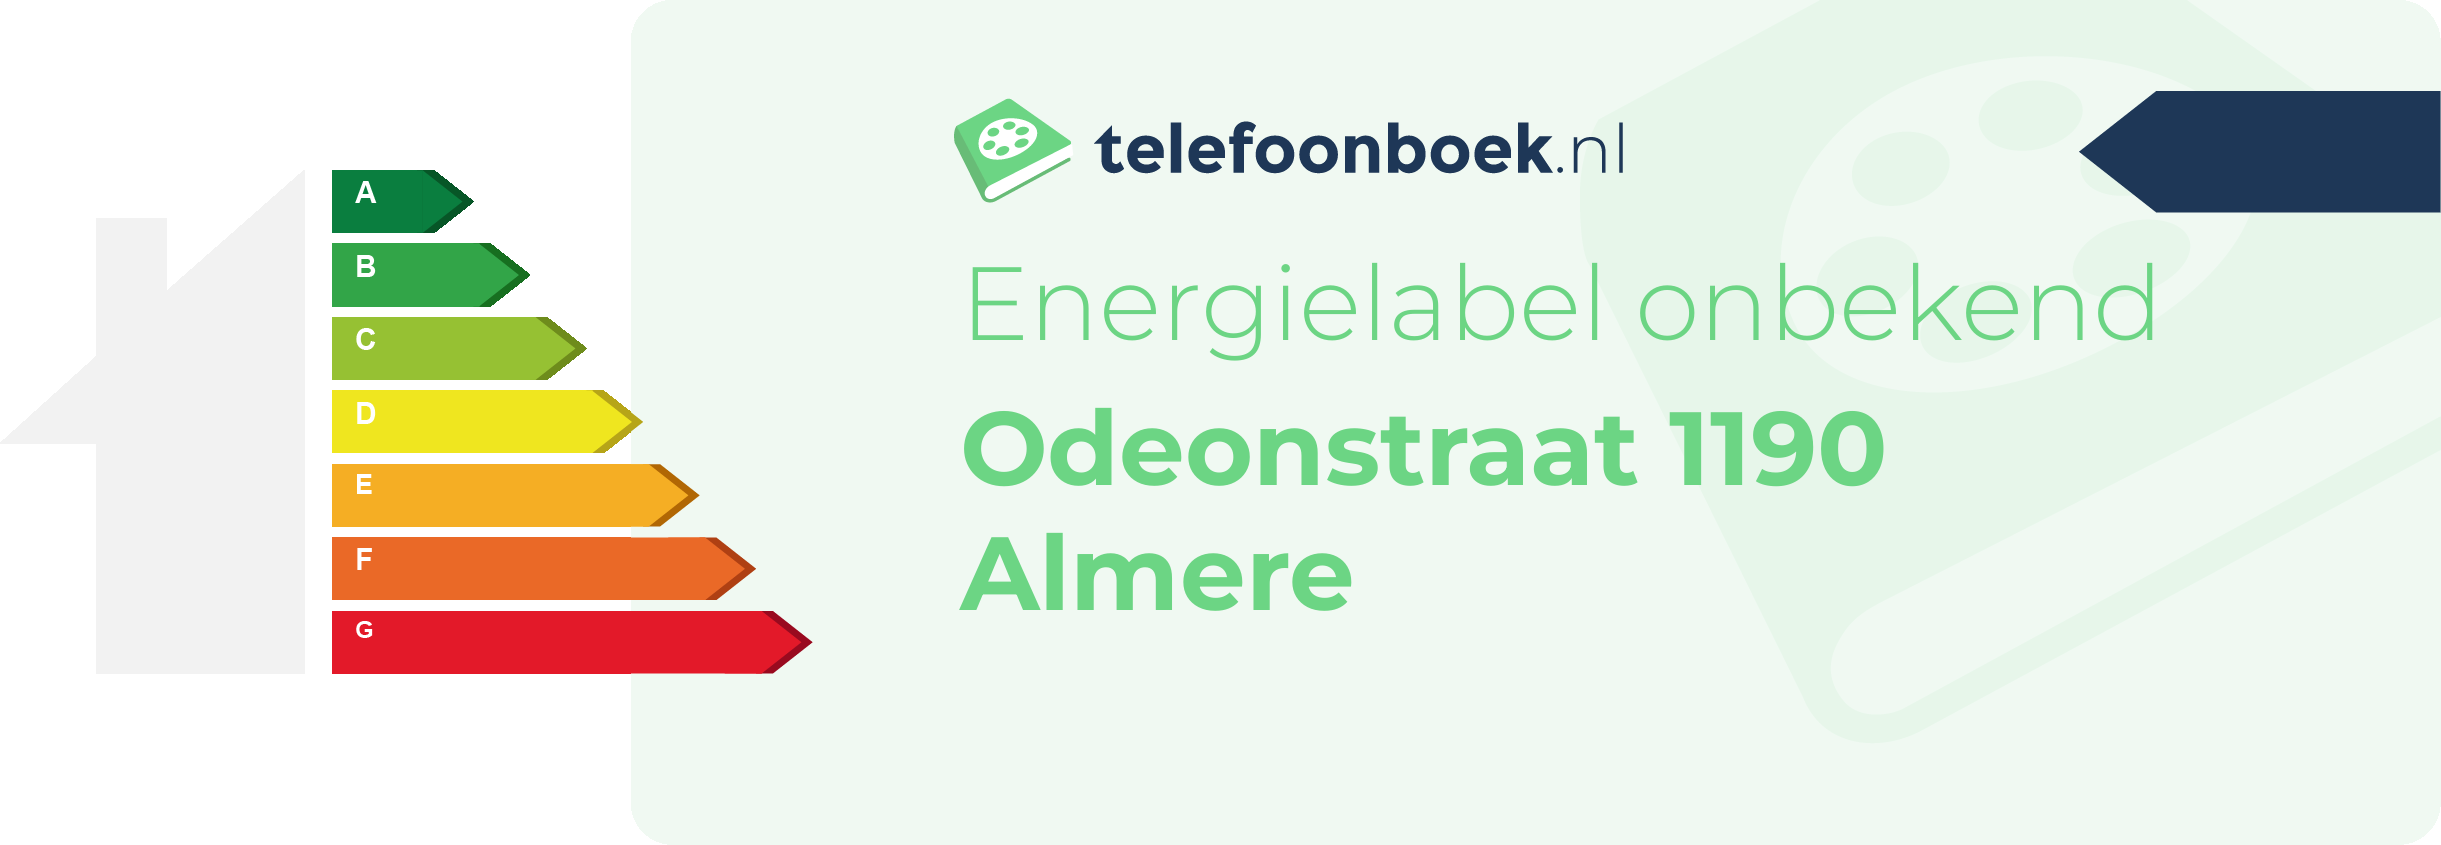 Energielabel Odeonstraat 1190 Almere